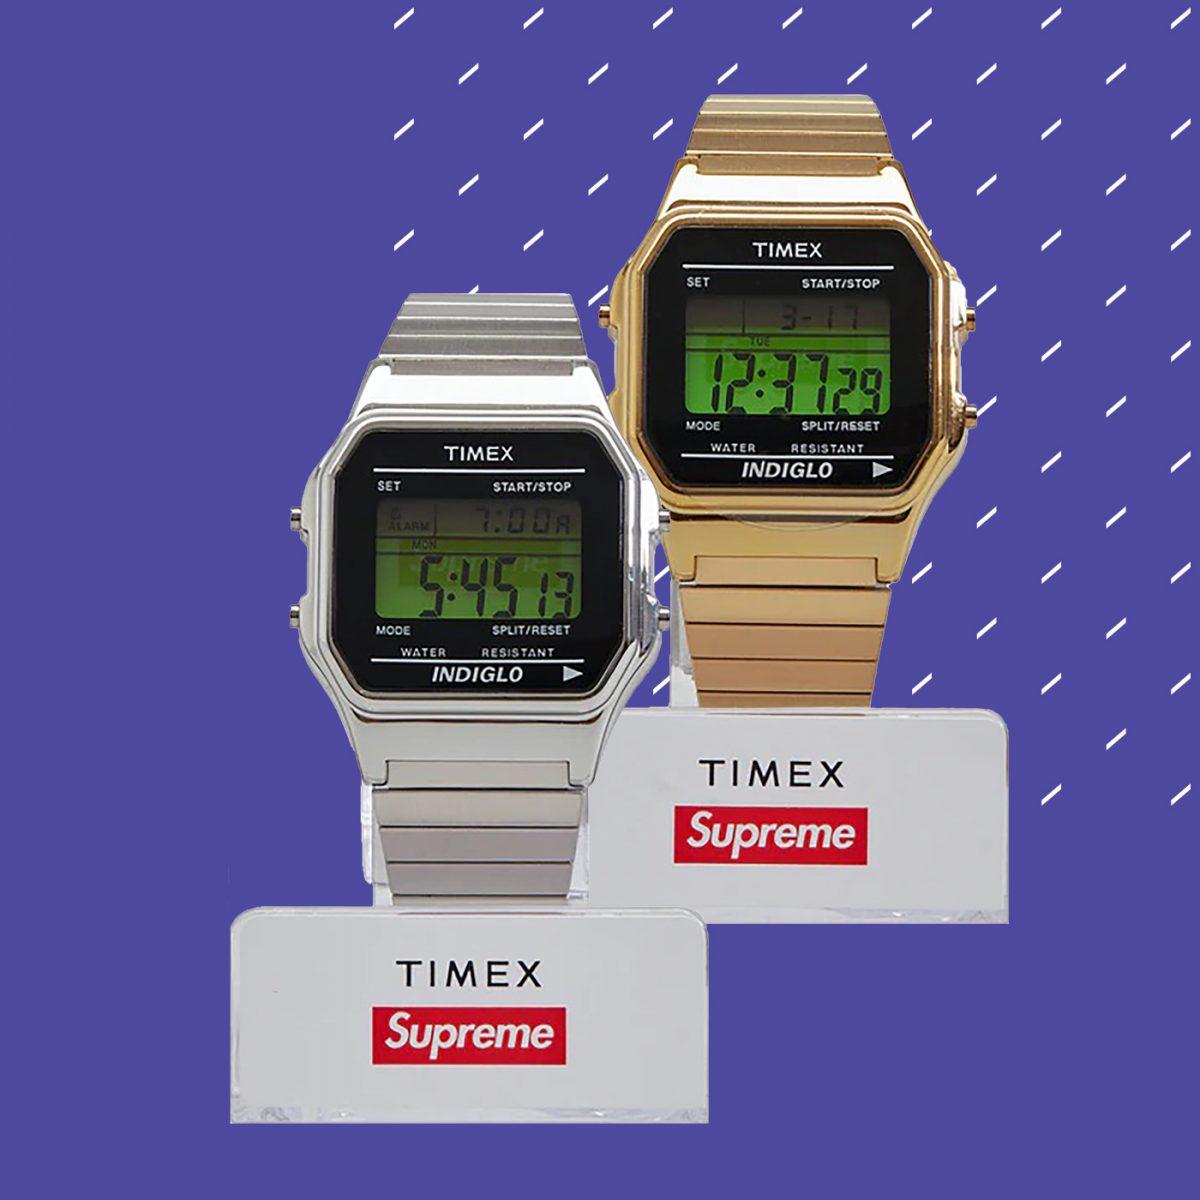 日本公式 supreme timex digitar watch | artfive.co.jp